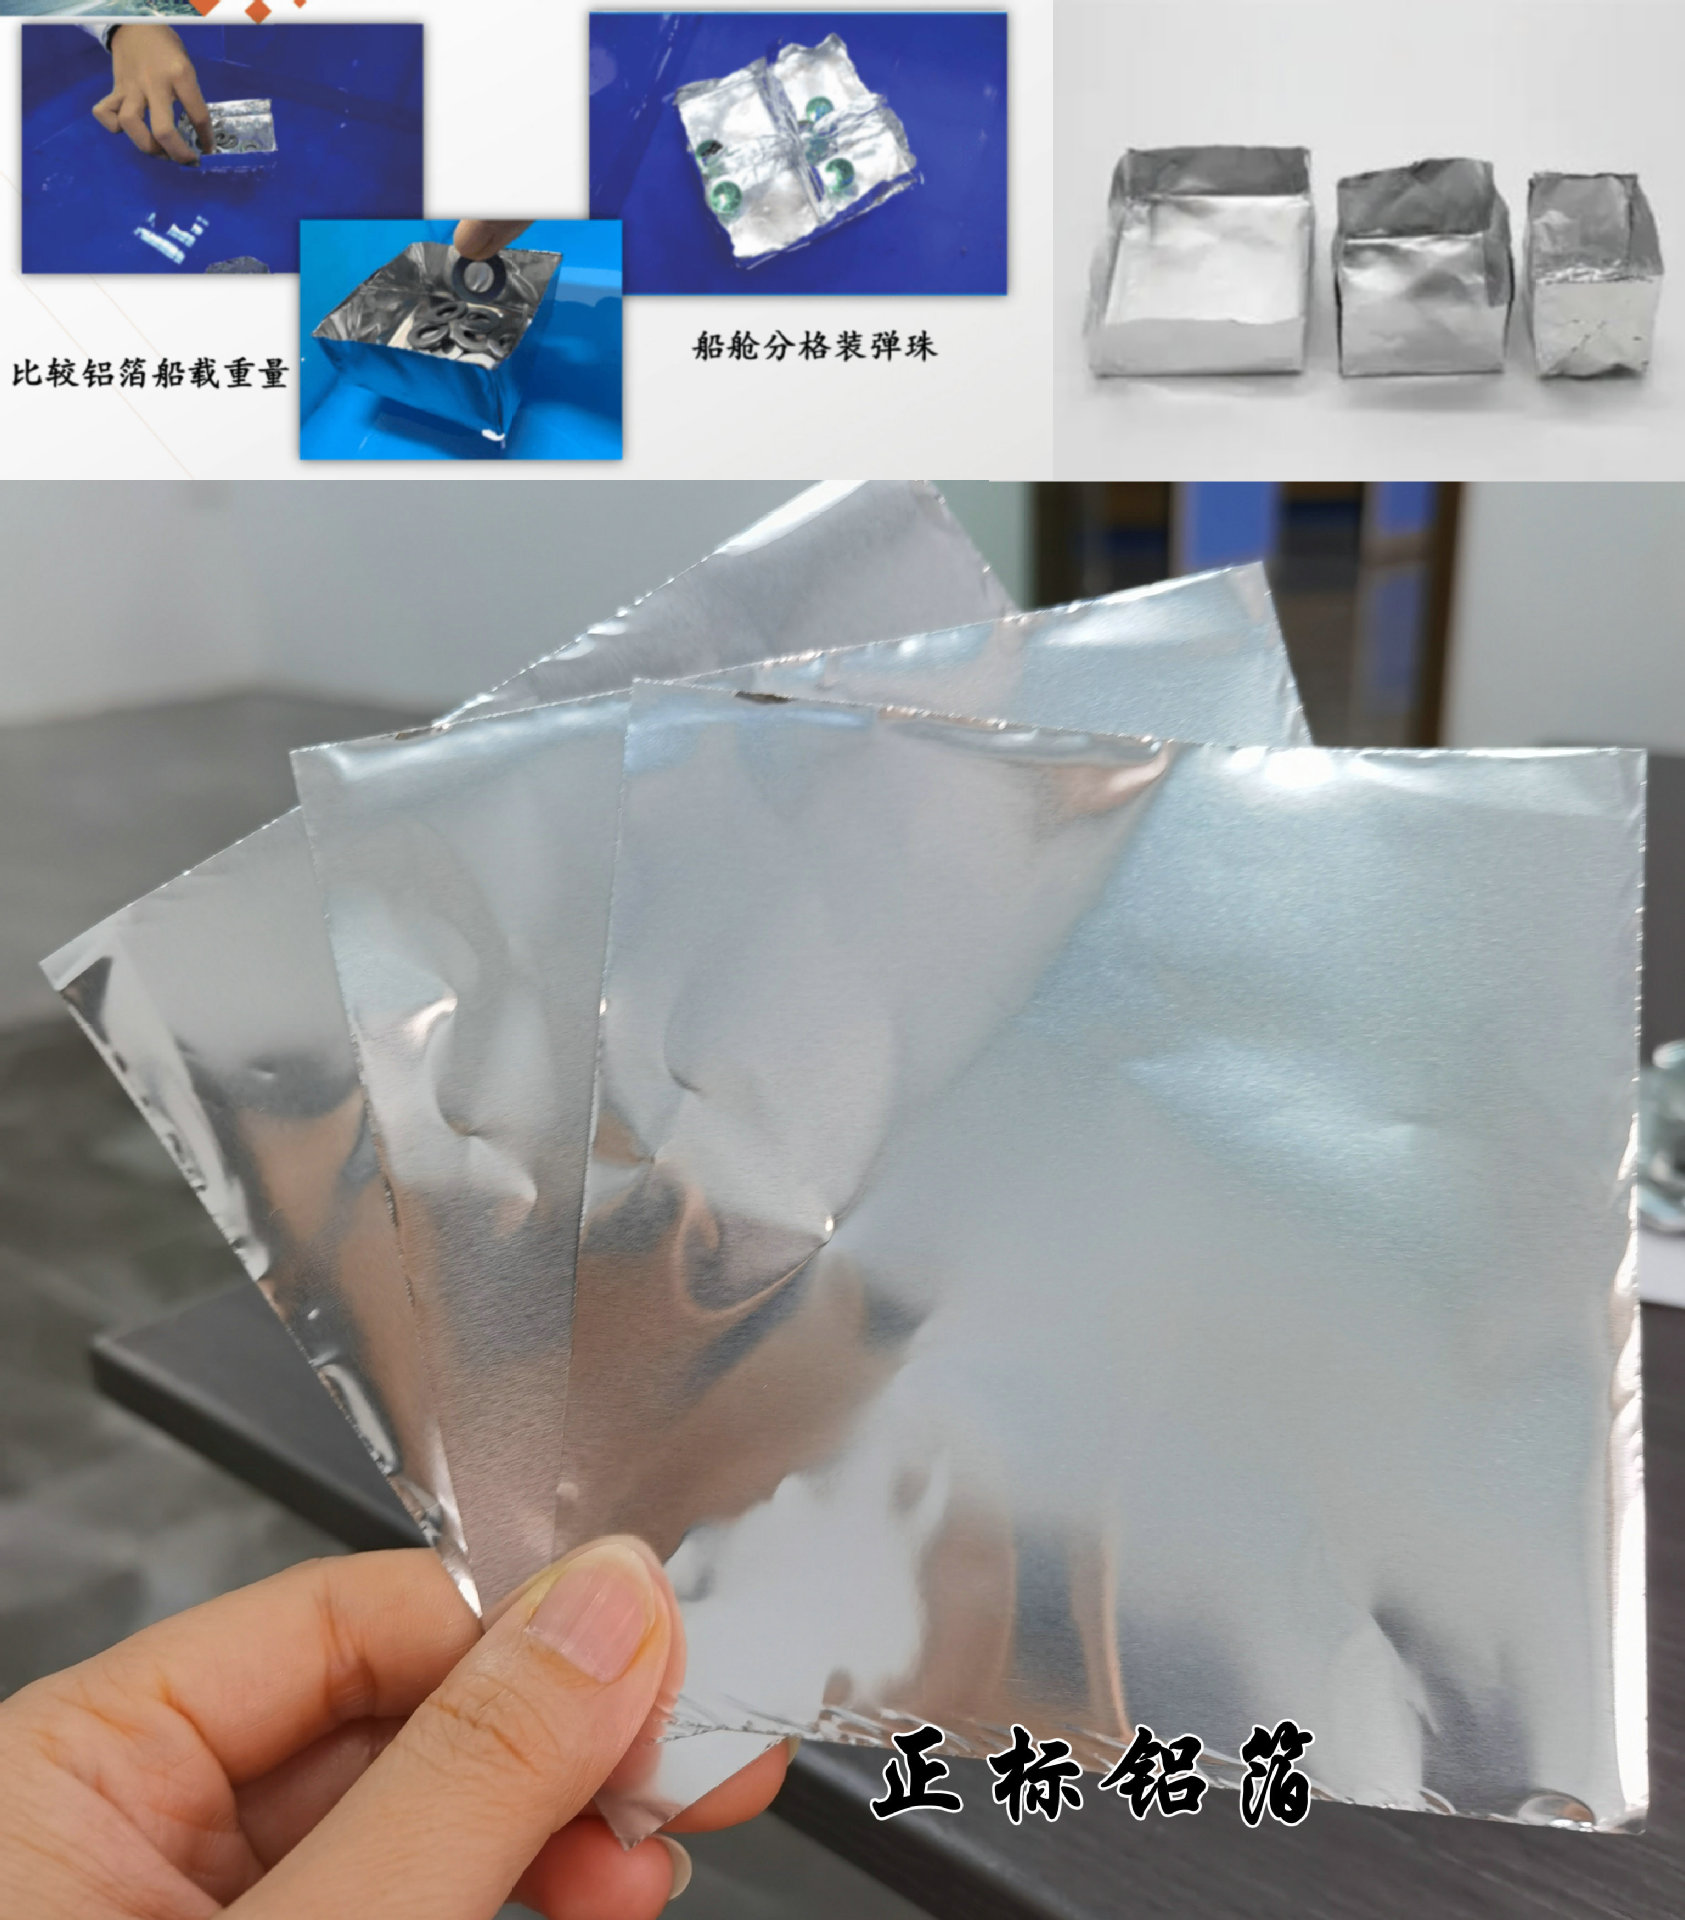 spot： extra thick 30 micron aluminized paper-teaching courseware aluminum foil boat-tin foil painting-pinch model tin foil